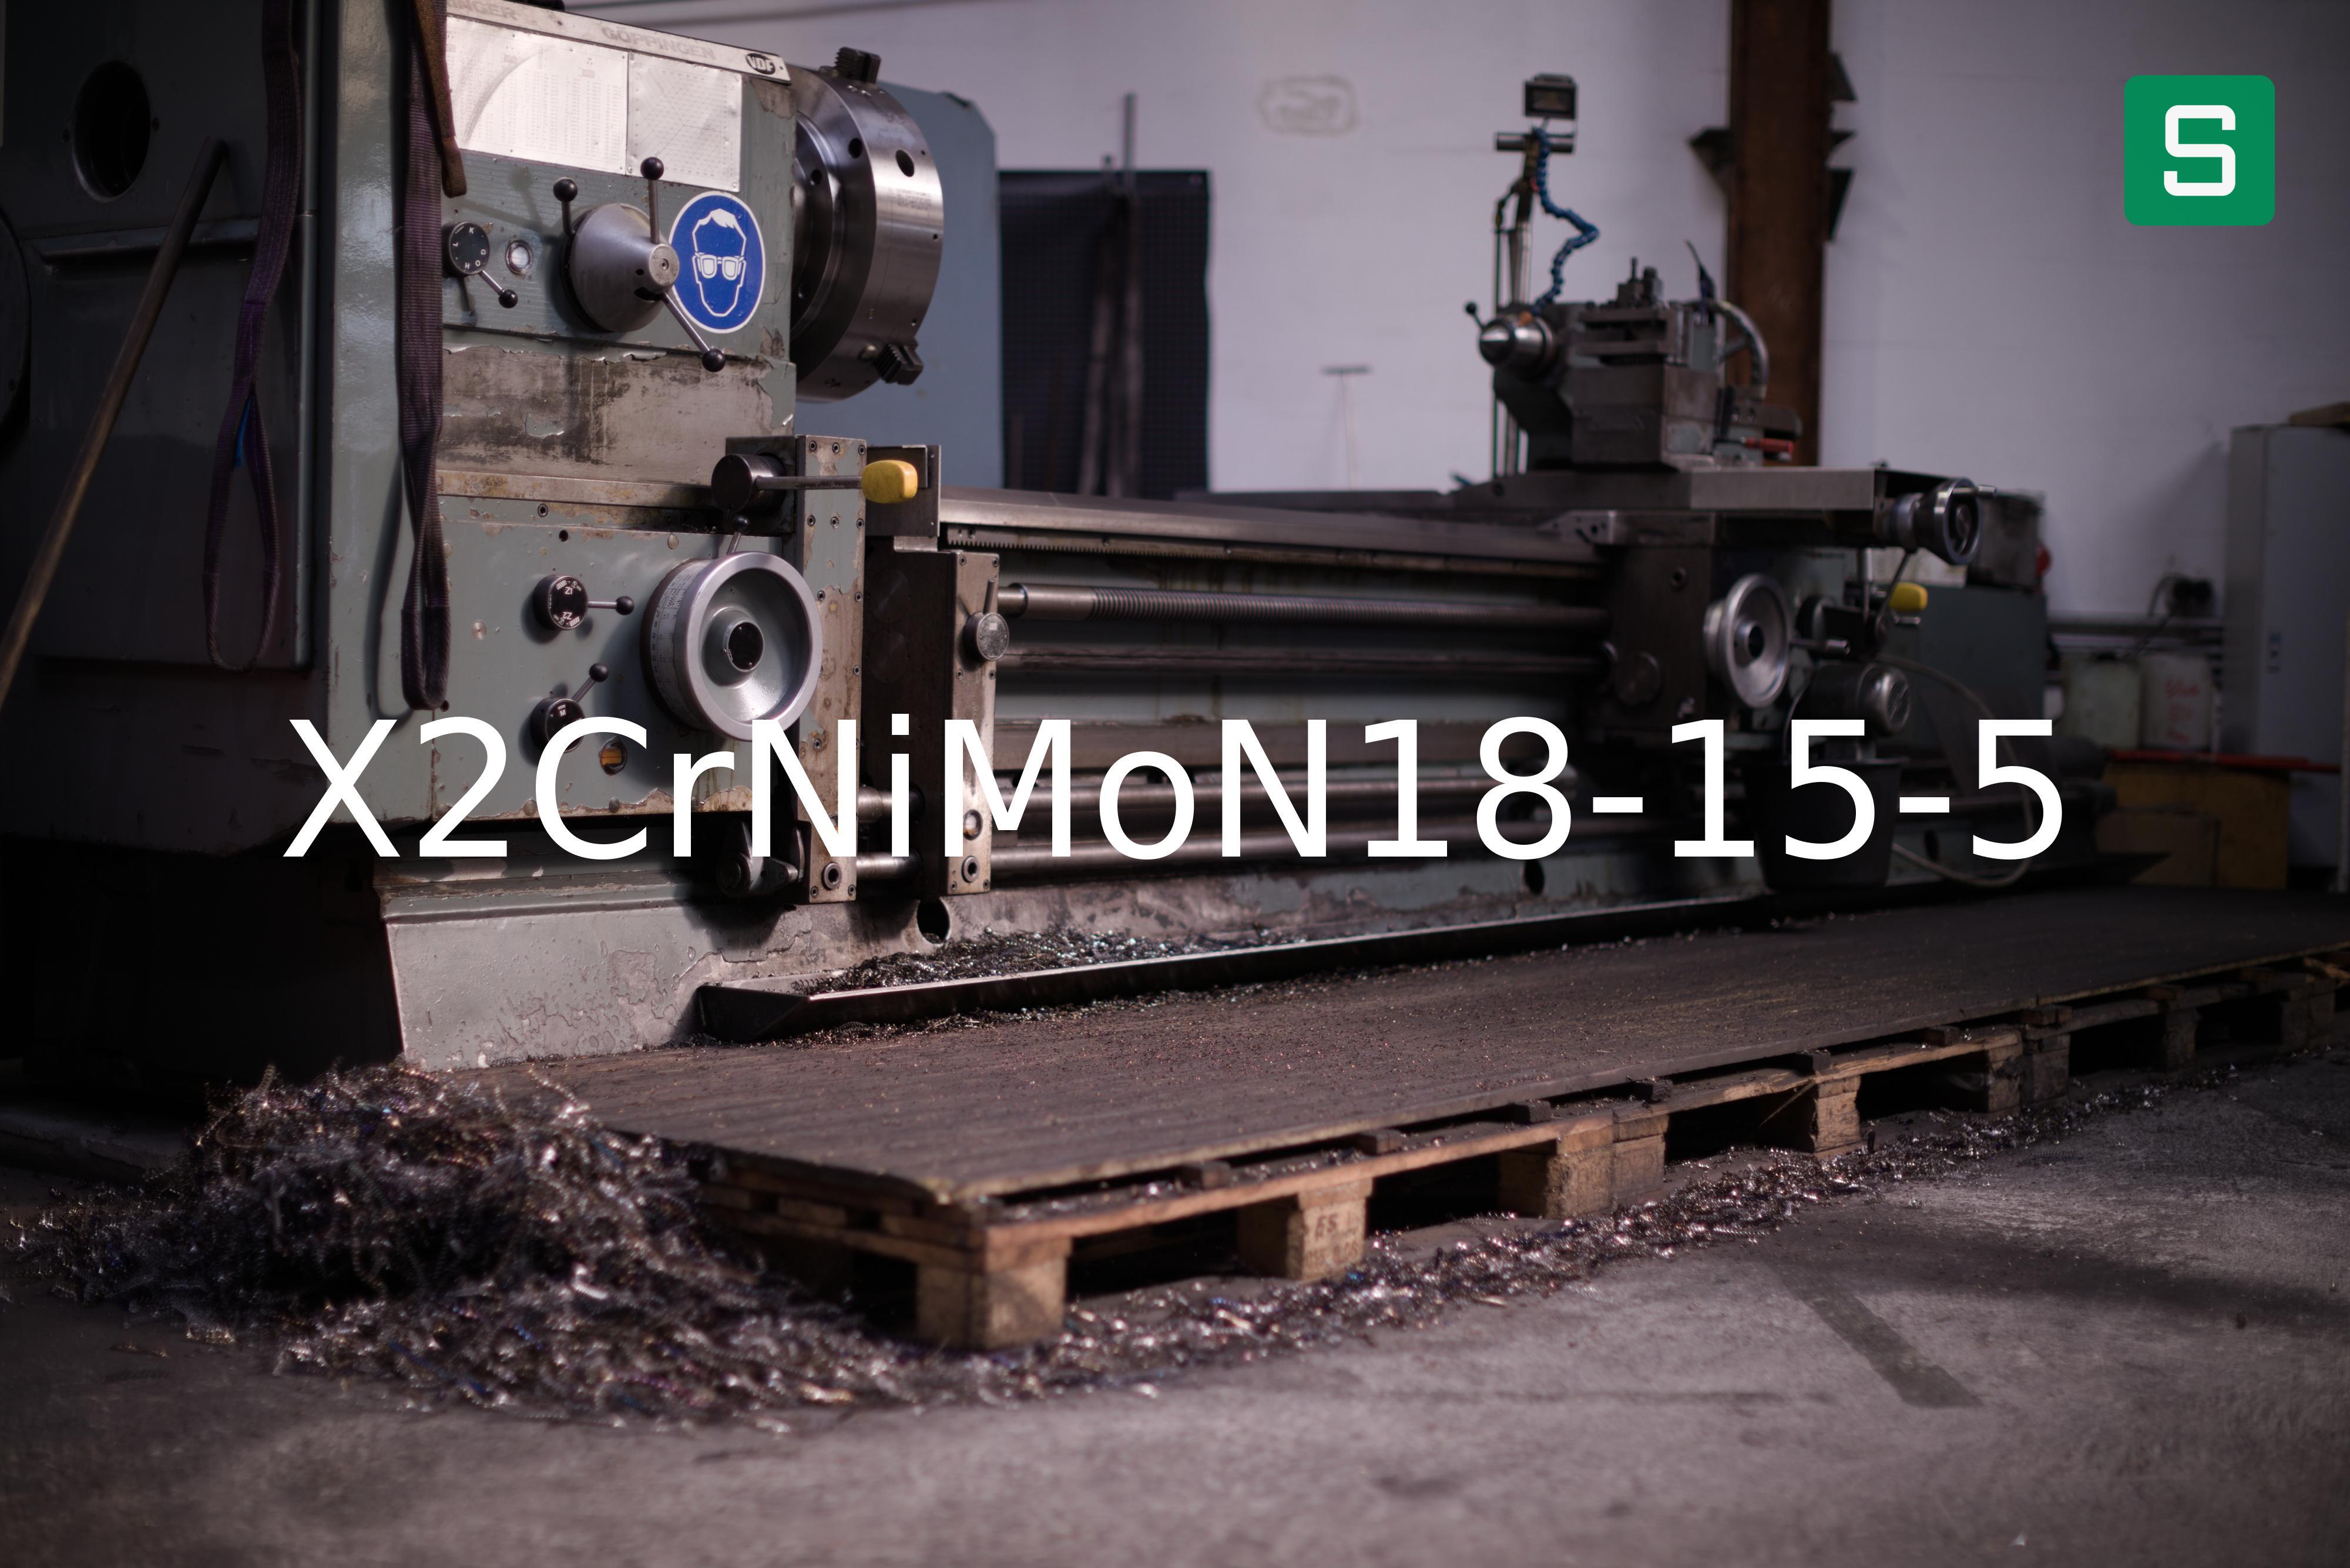 Steel Material: X2CrNiMoN18-15-5